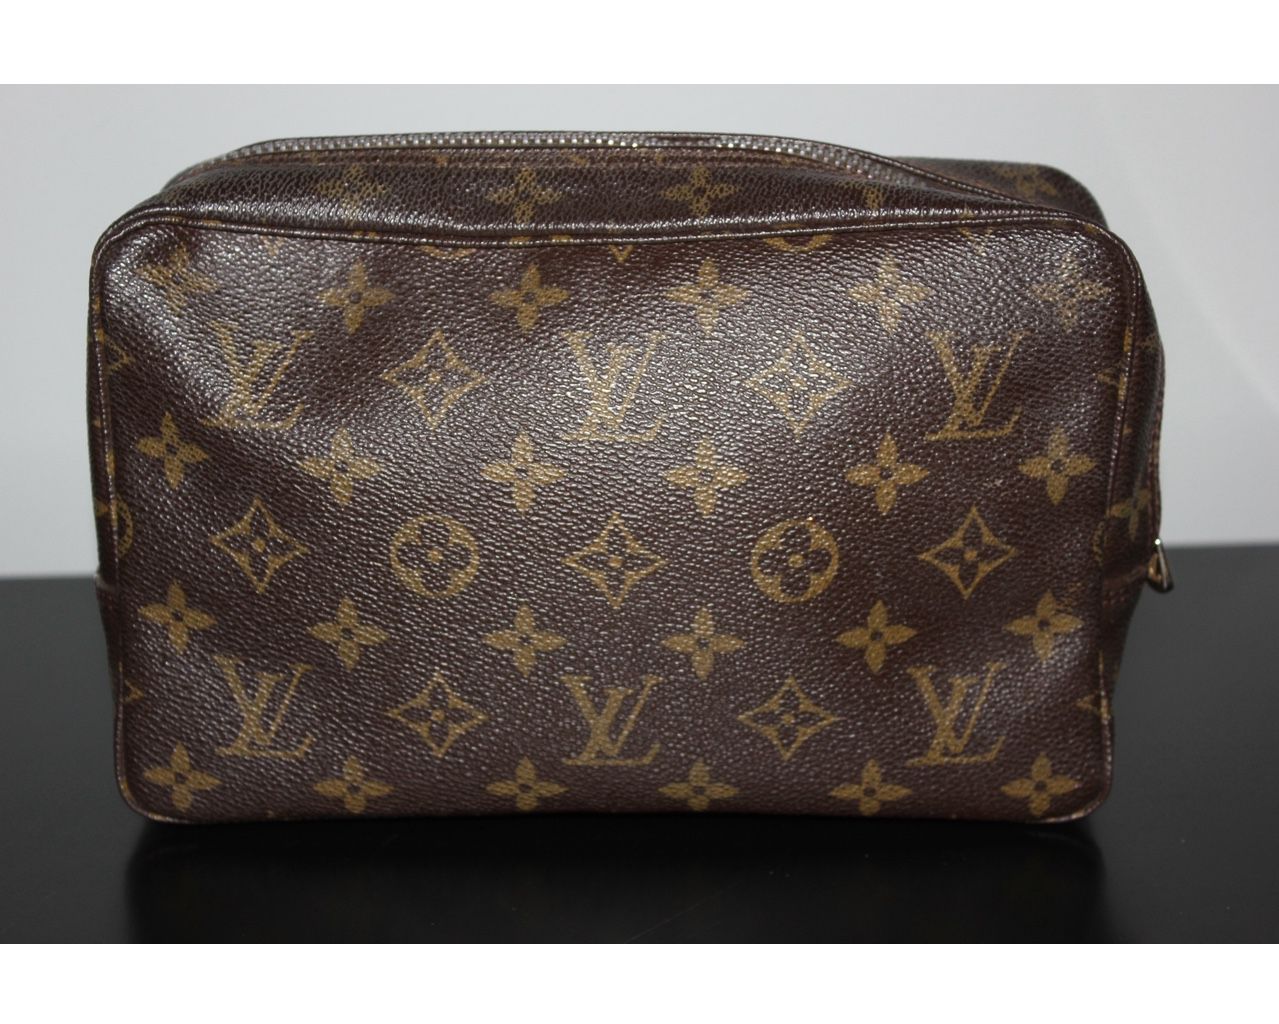 Authentic Louis Vuitton Trousse 23 Cosmetic / Toiletry Bag - Monogram